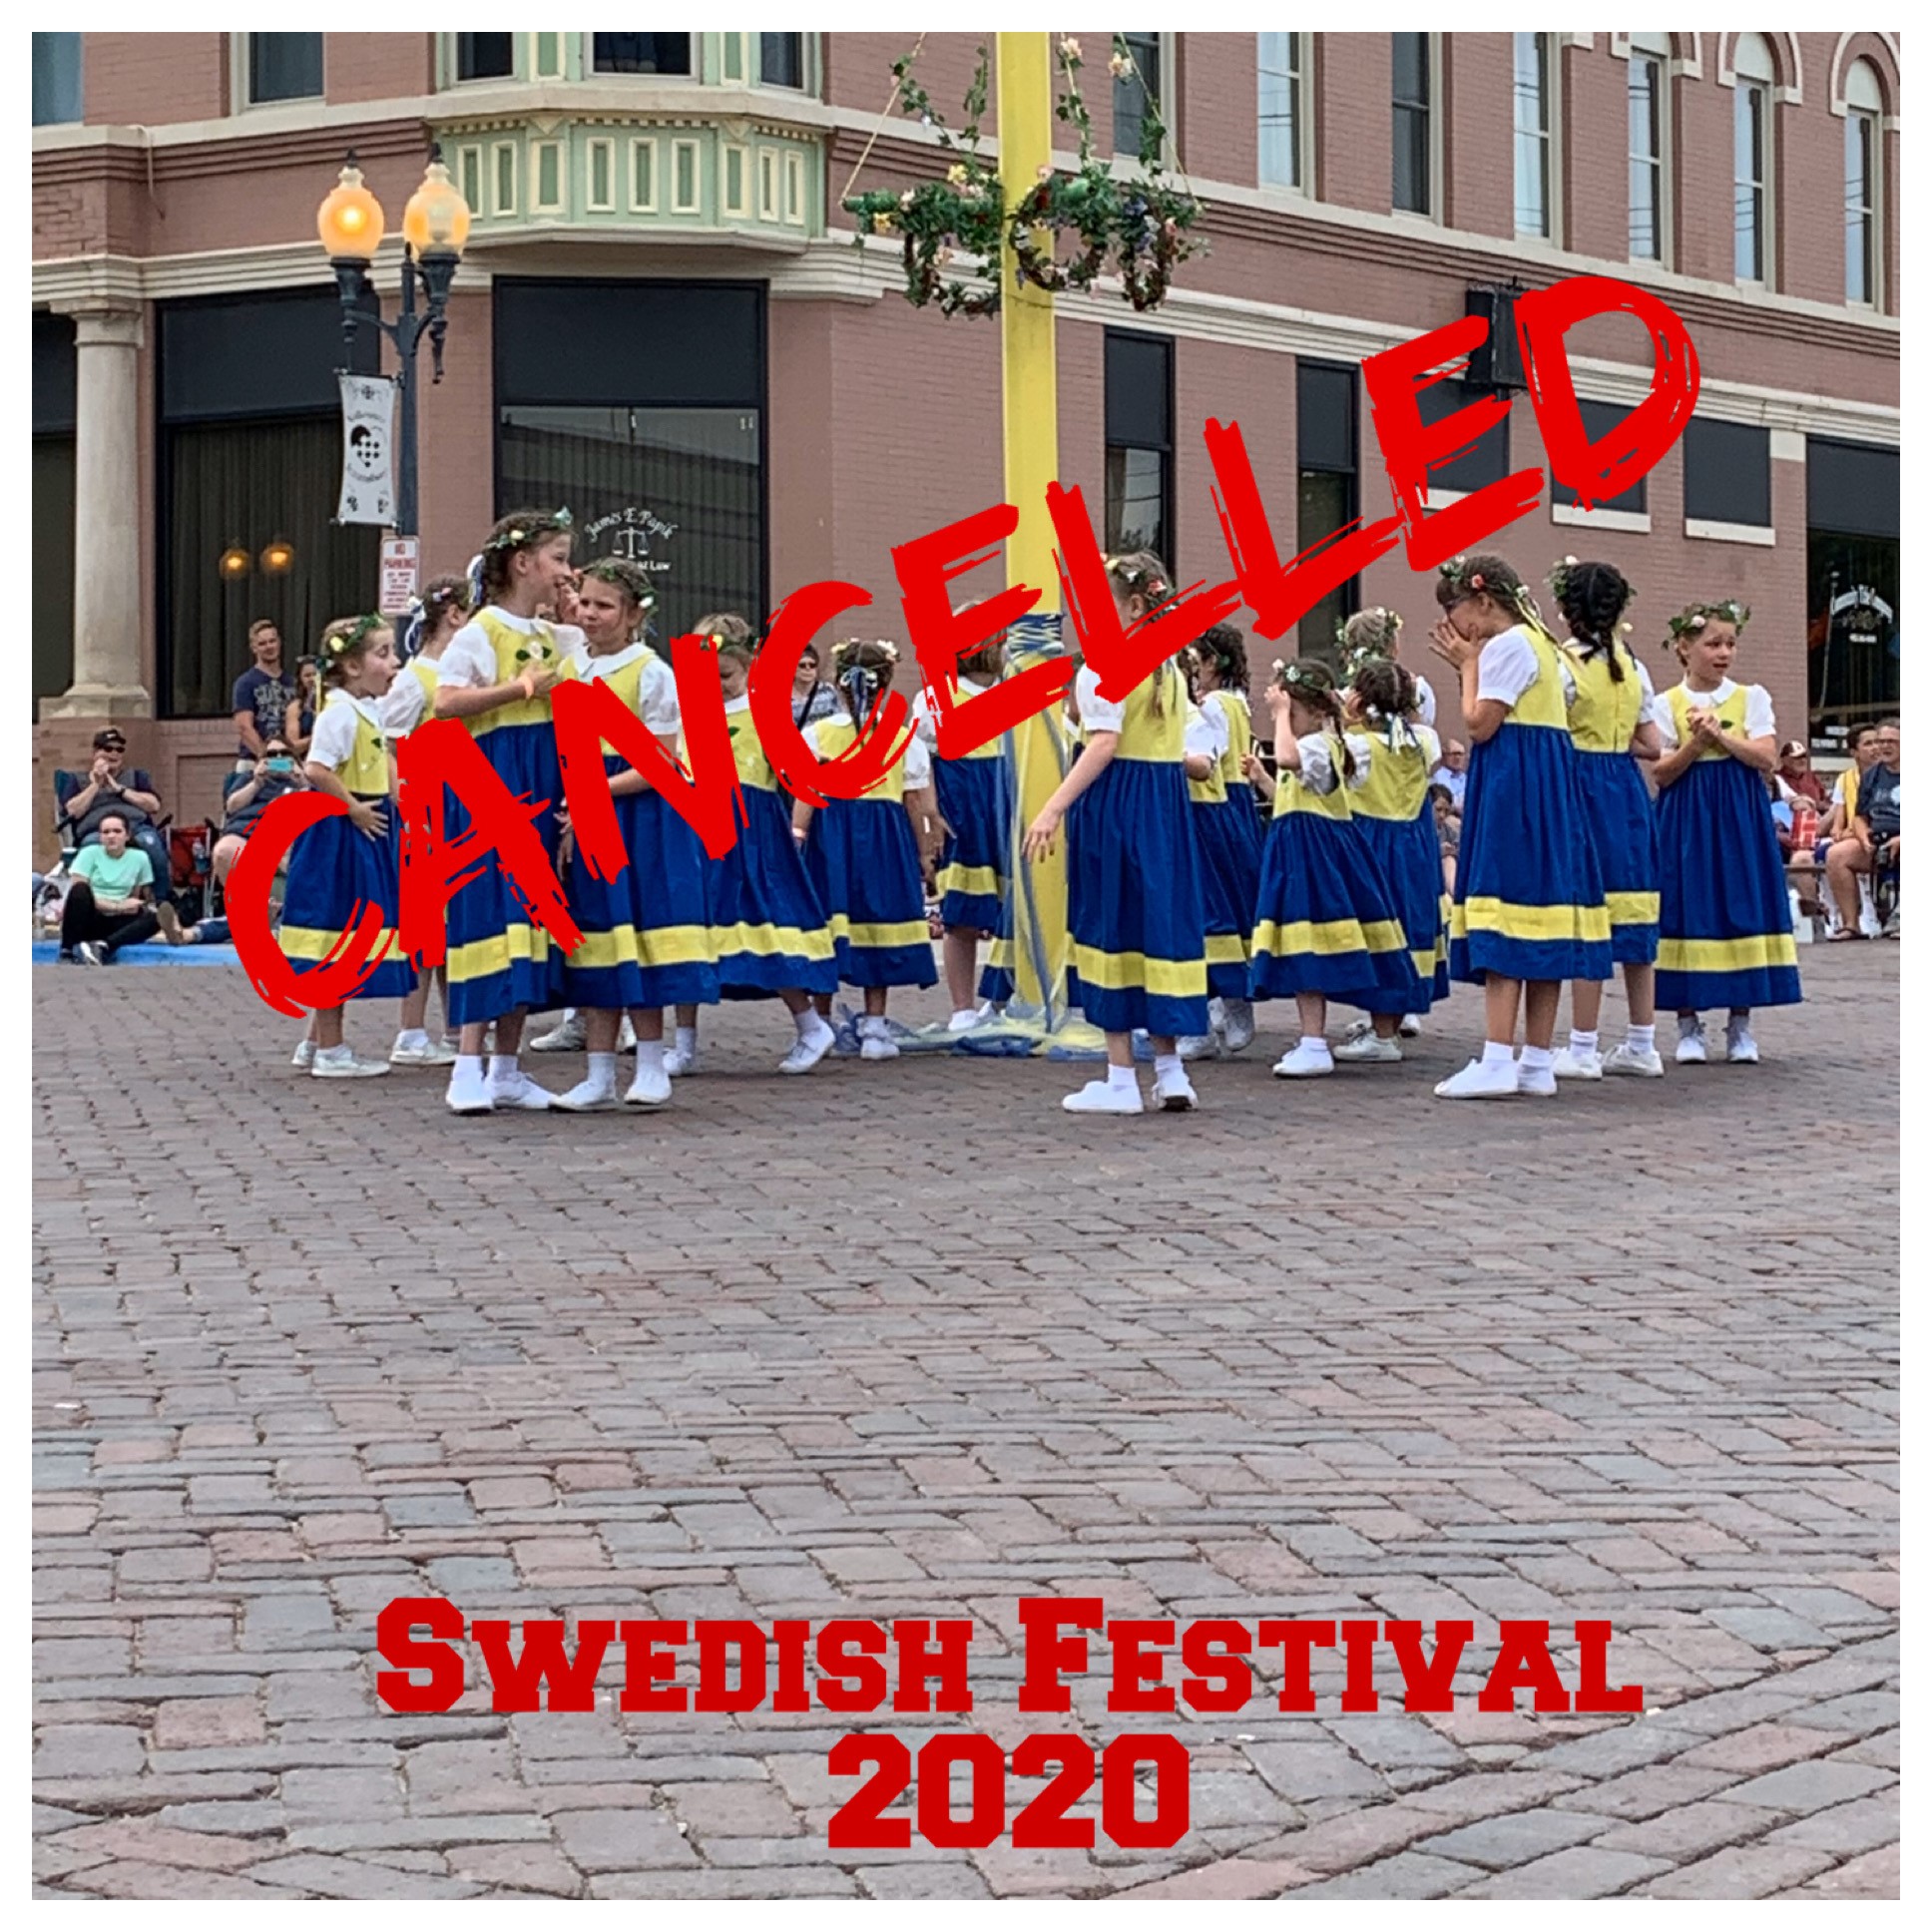 The Swedish Festival